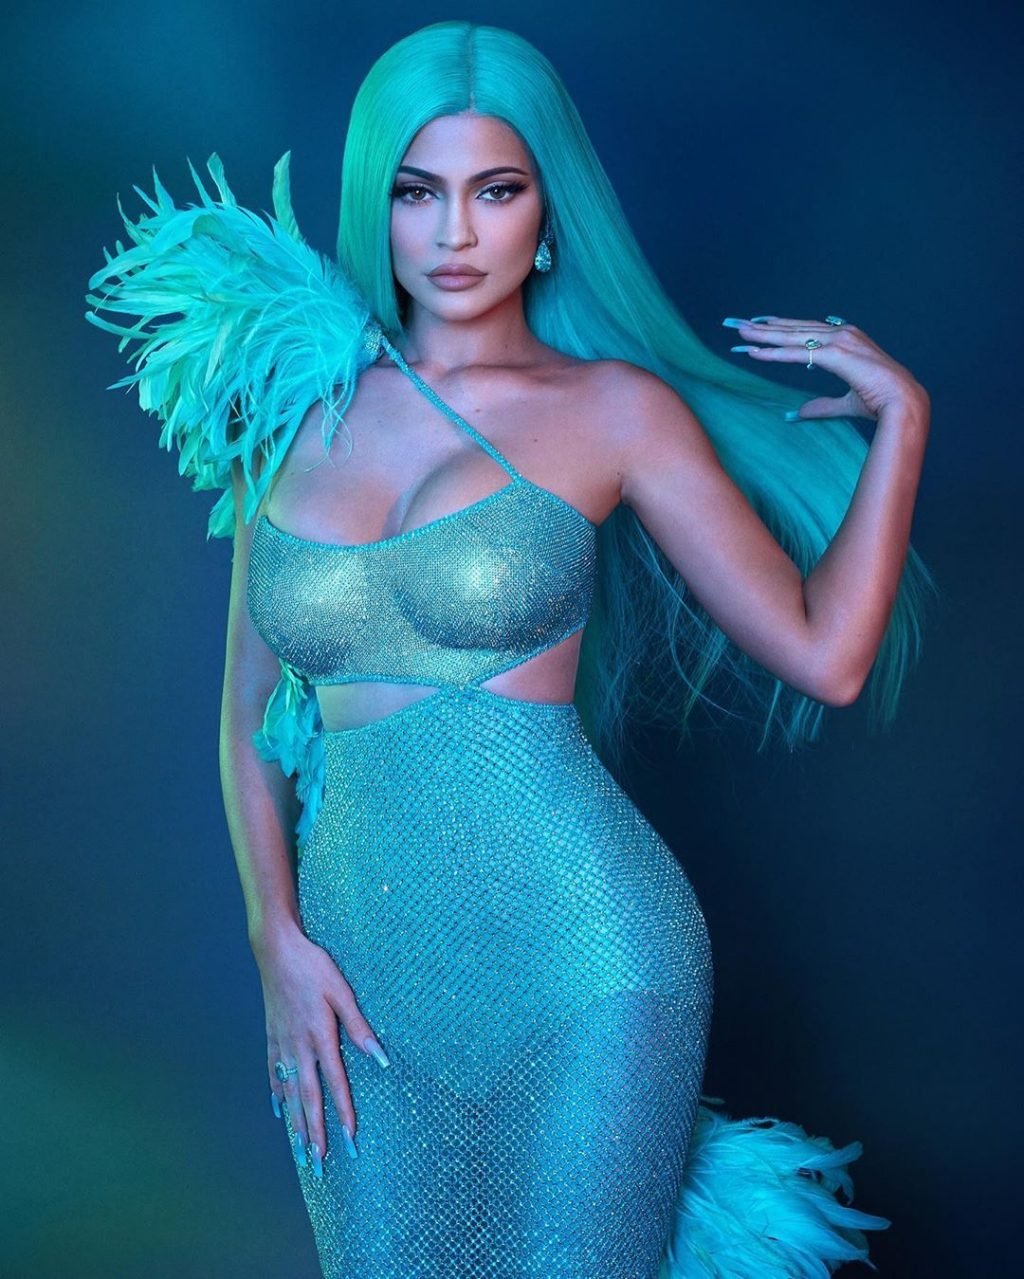 Kylie Jenner Sexy (7 Hot Photos)